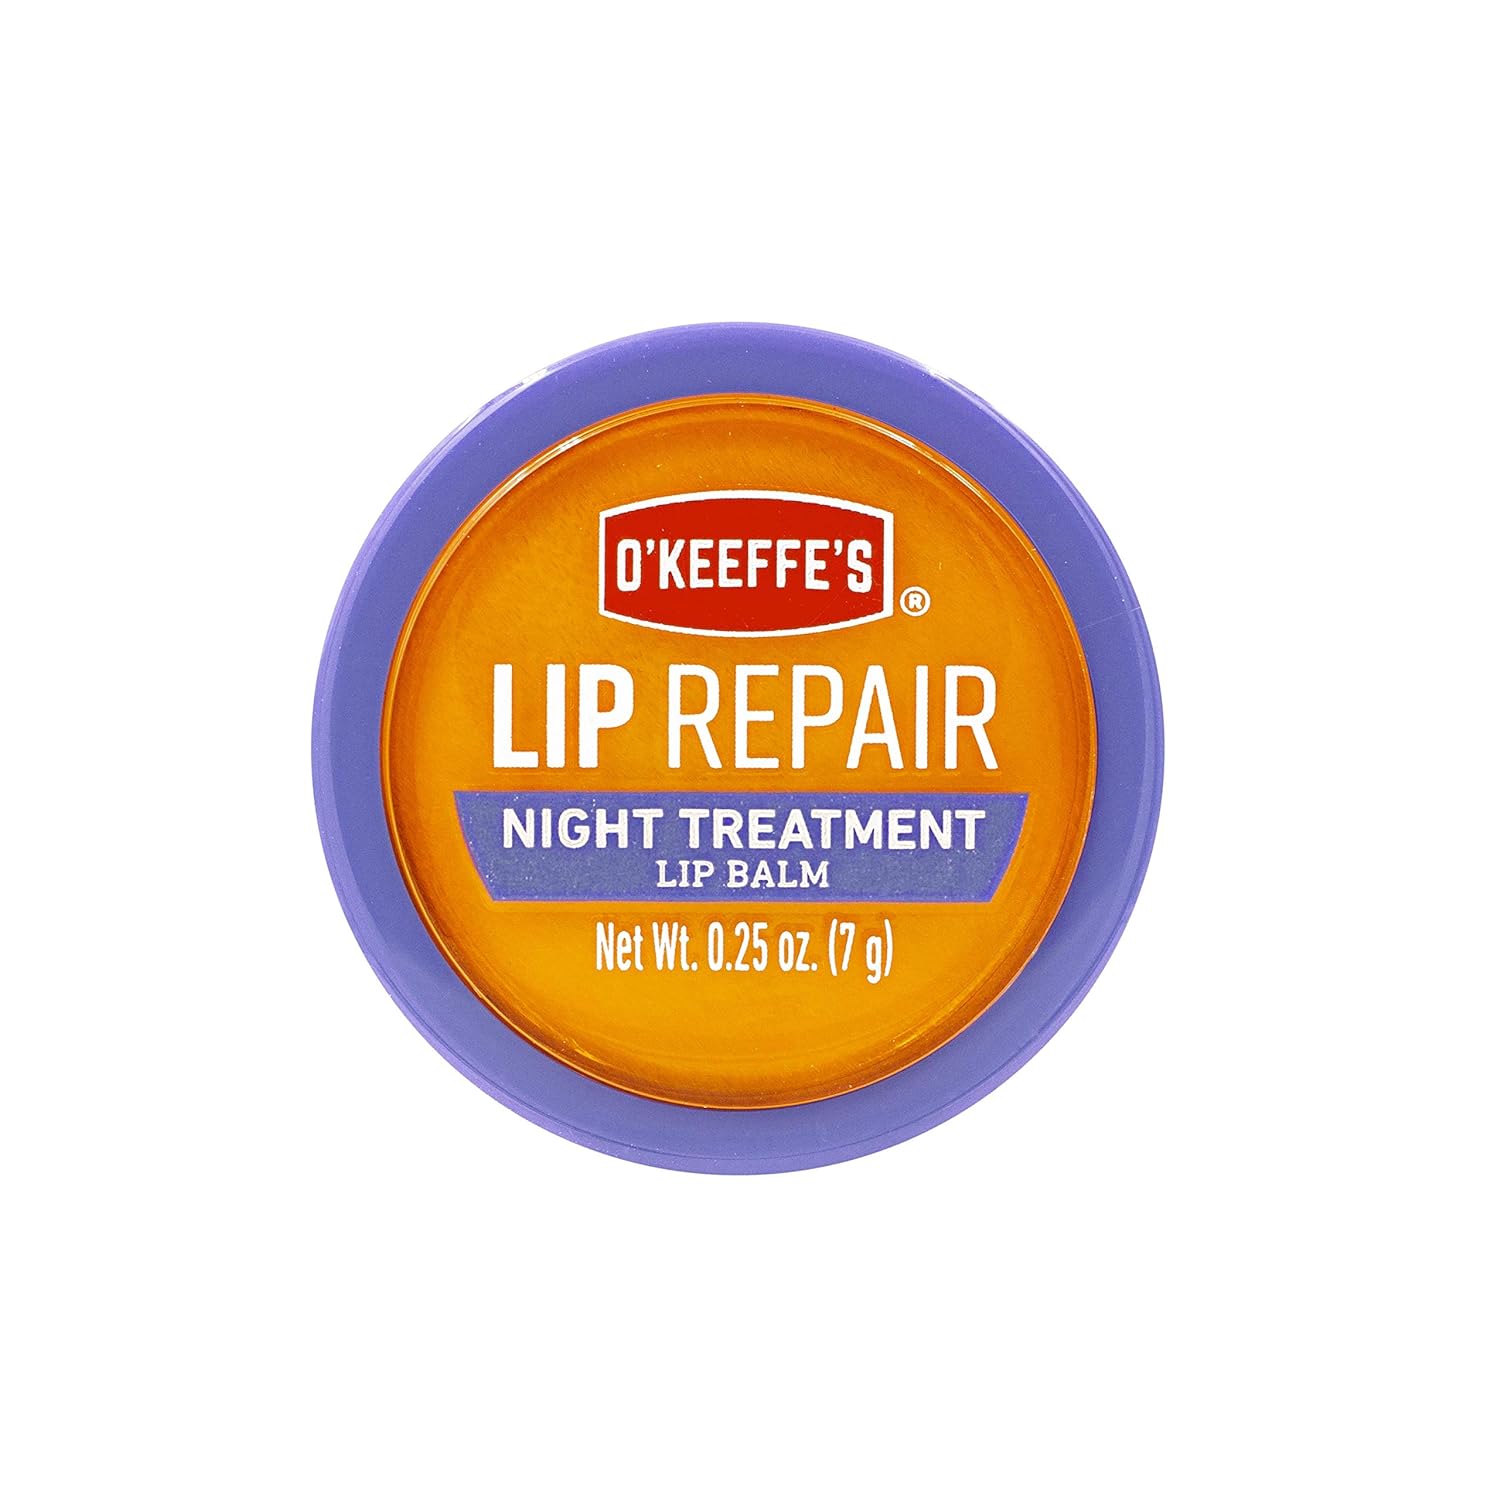 O'Keeffe's Lip Repair Night Treatment Lip Balm, 0.25 Ounce Jar, (Pack of 1) : Beauty & Personal Care